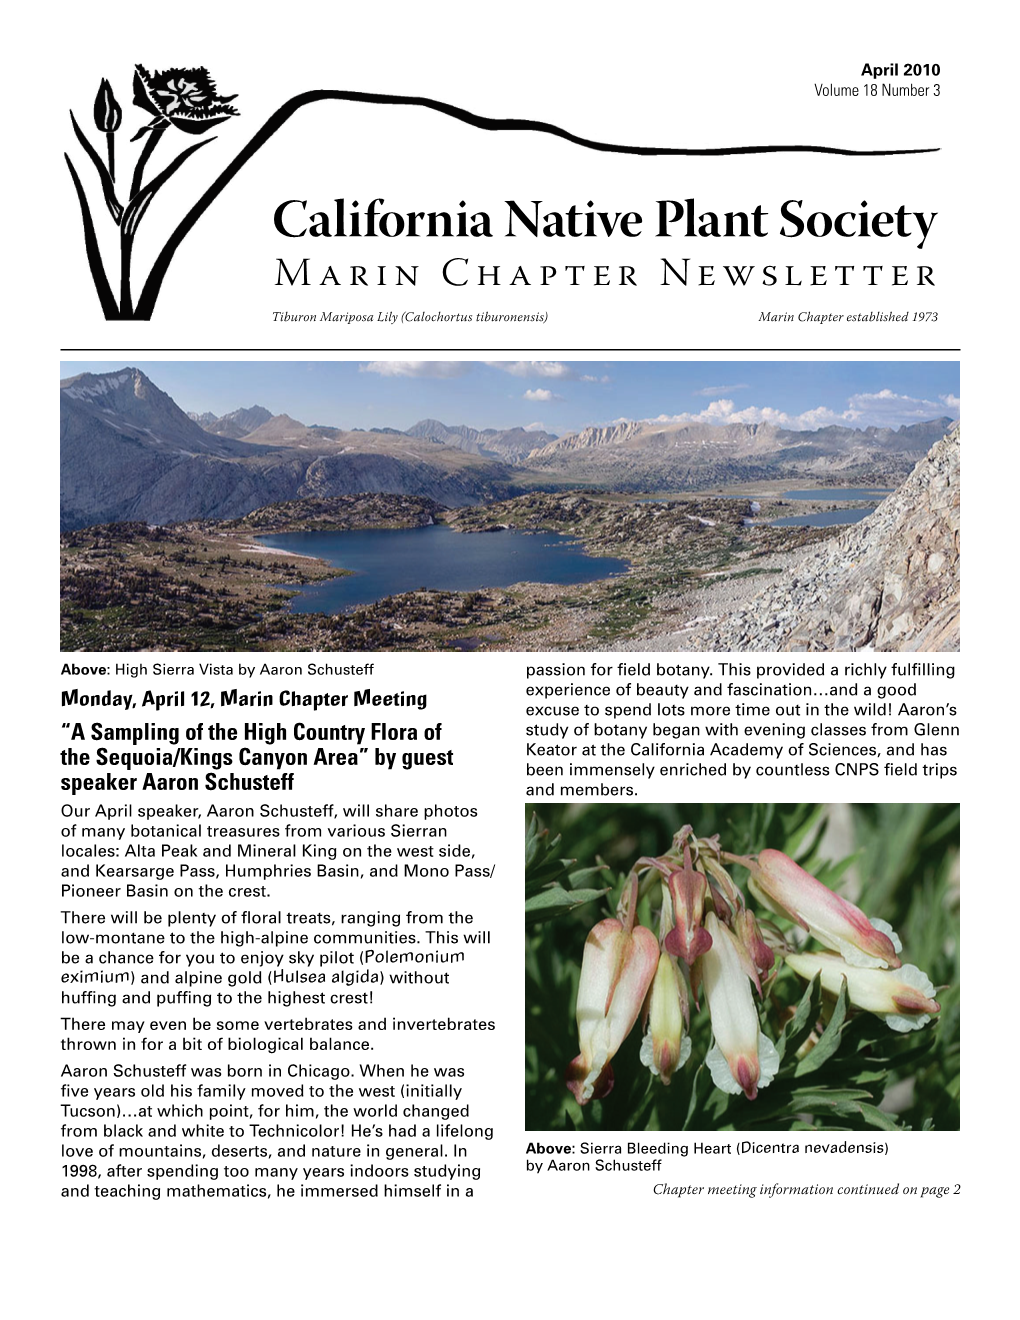 California Native Plant Society Marin Chapter Newsletter Tiburon Mariposa Lily (Calochortus Tiburonensis) Marin Chapter Established 1973